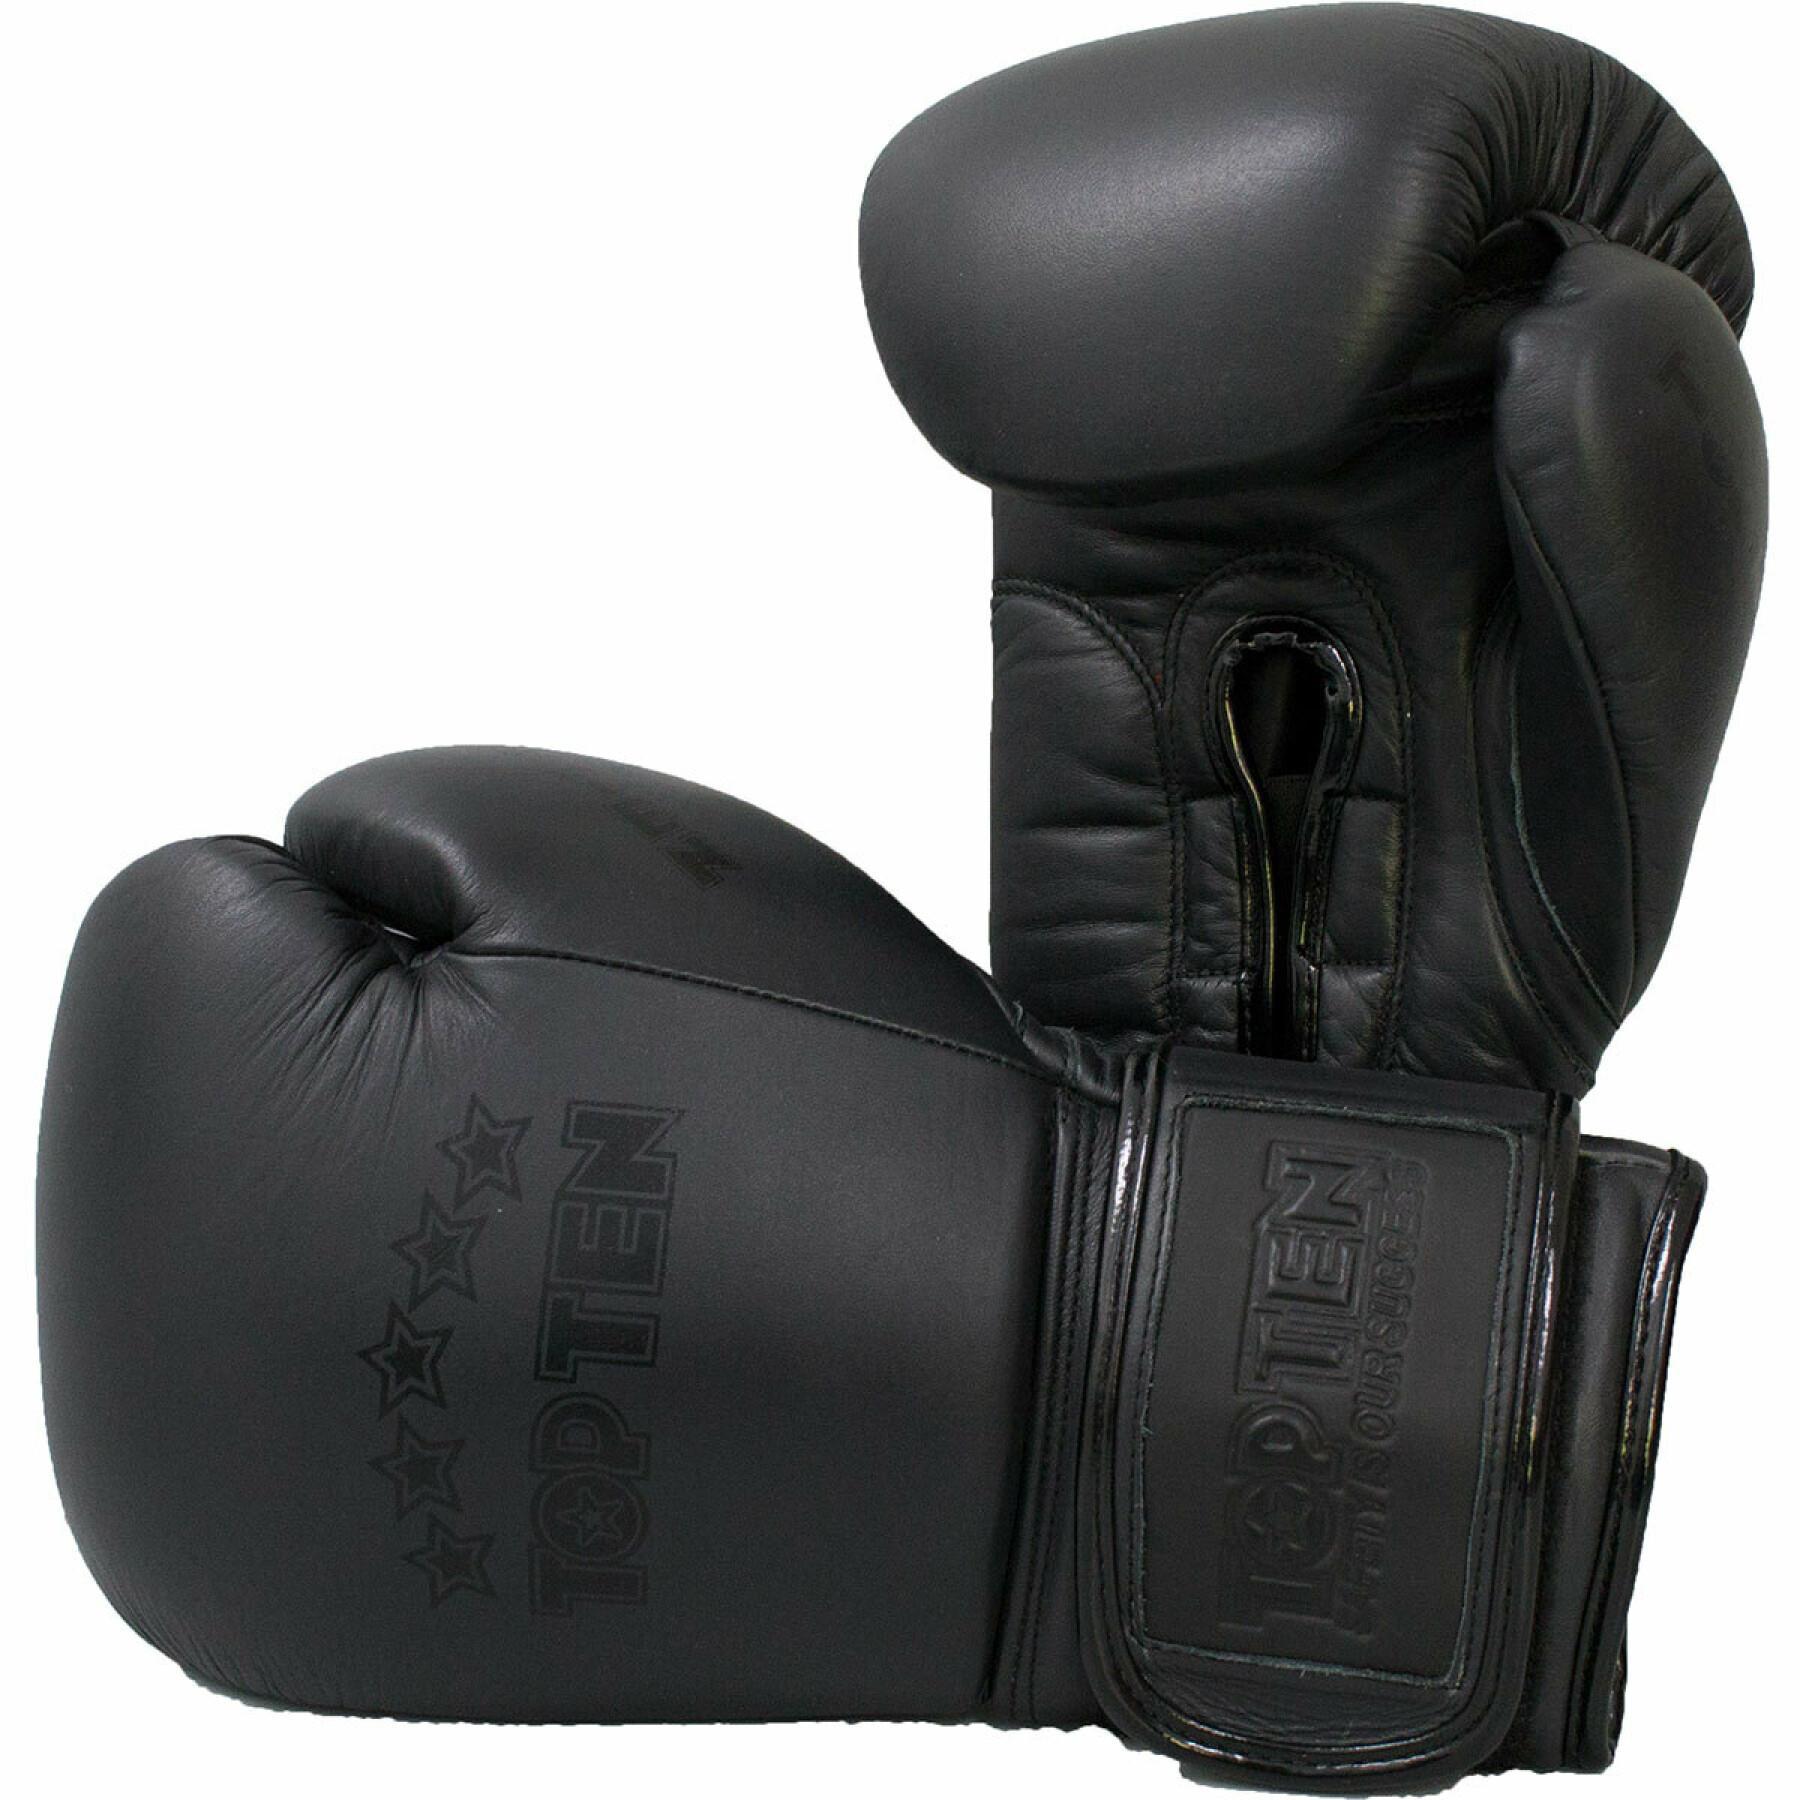 Multiboxing gloves Top Ten black "N"